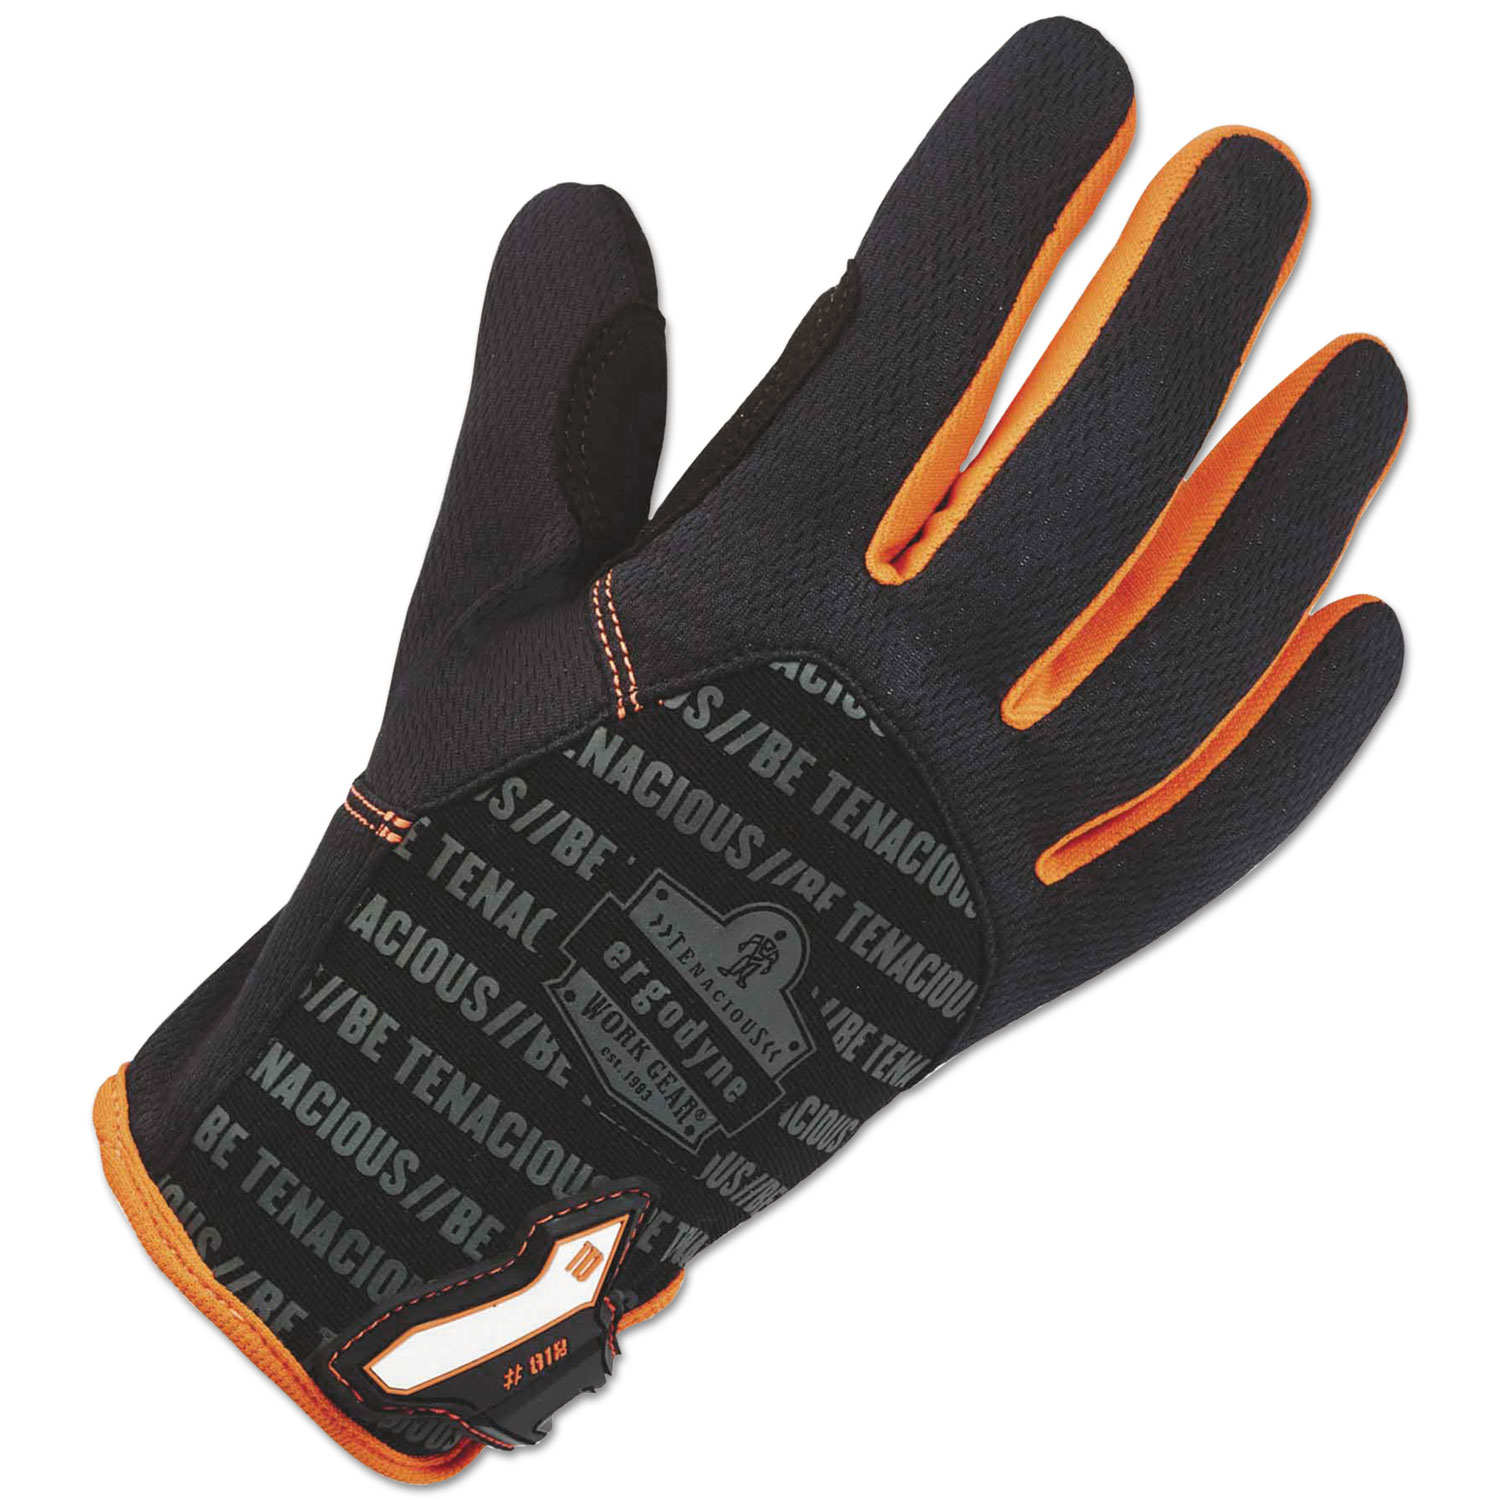  ergodyne 17174 ProFlex 812 Standard Utility Gloves, Black, Large, 1 Pair (EGO17174) 